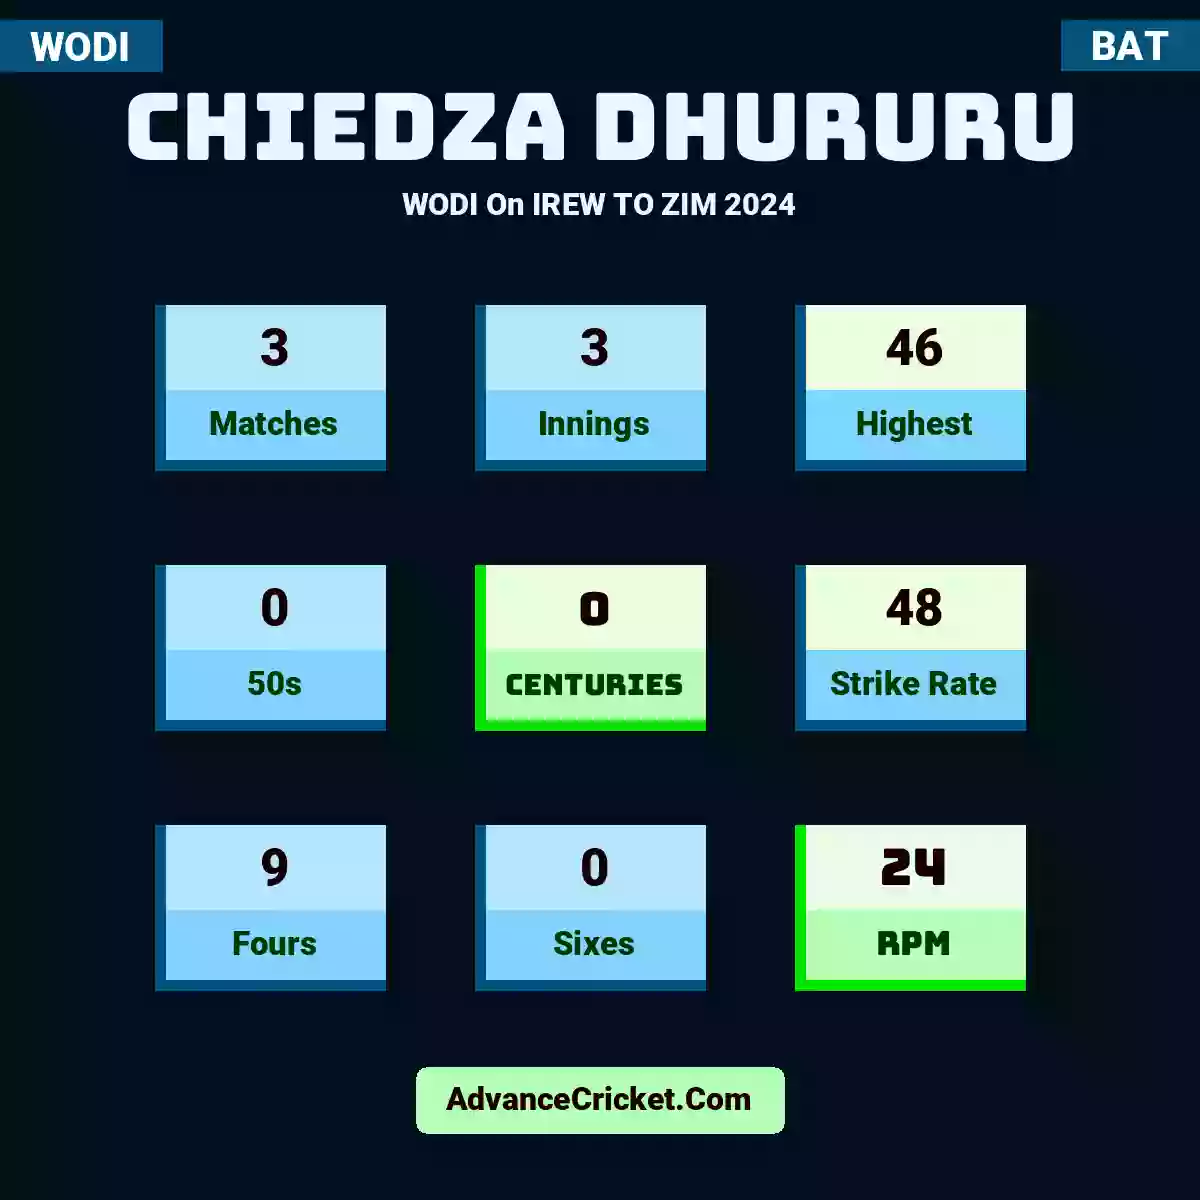 Chiedza Dhururu WODI  On IREW TO ZIM 2024, Chiedza Dhururu played 3 matches, scored 46 runs as highest, 0 half-centuries, and 0 centuries, with a strike rate of 48. C.Dhururu hit 9 fours and 0 sixes, with an RPM of 24.